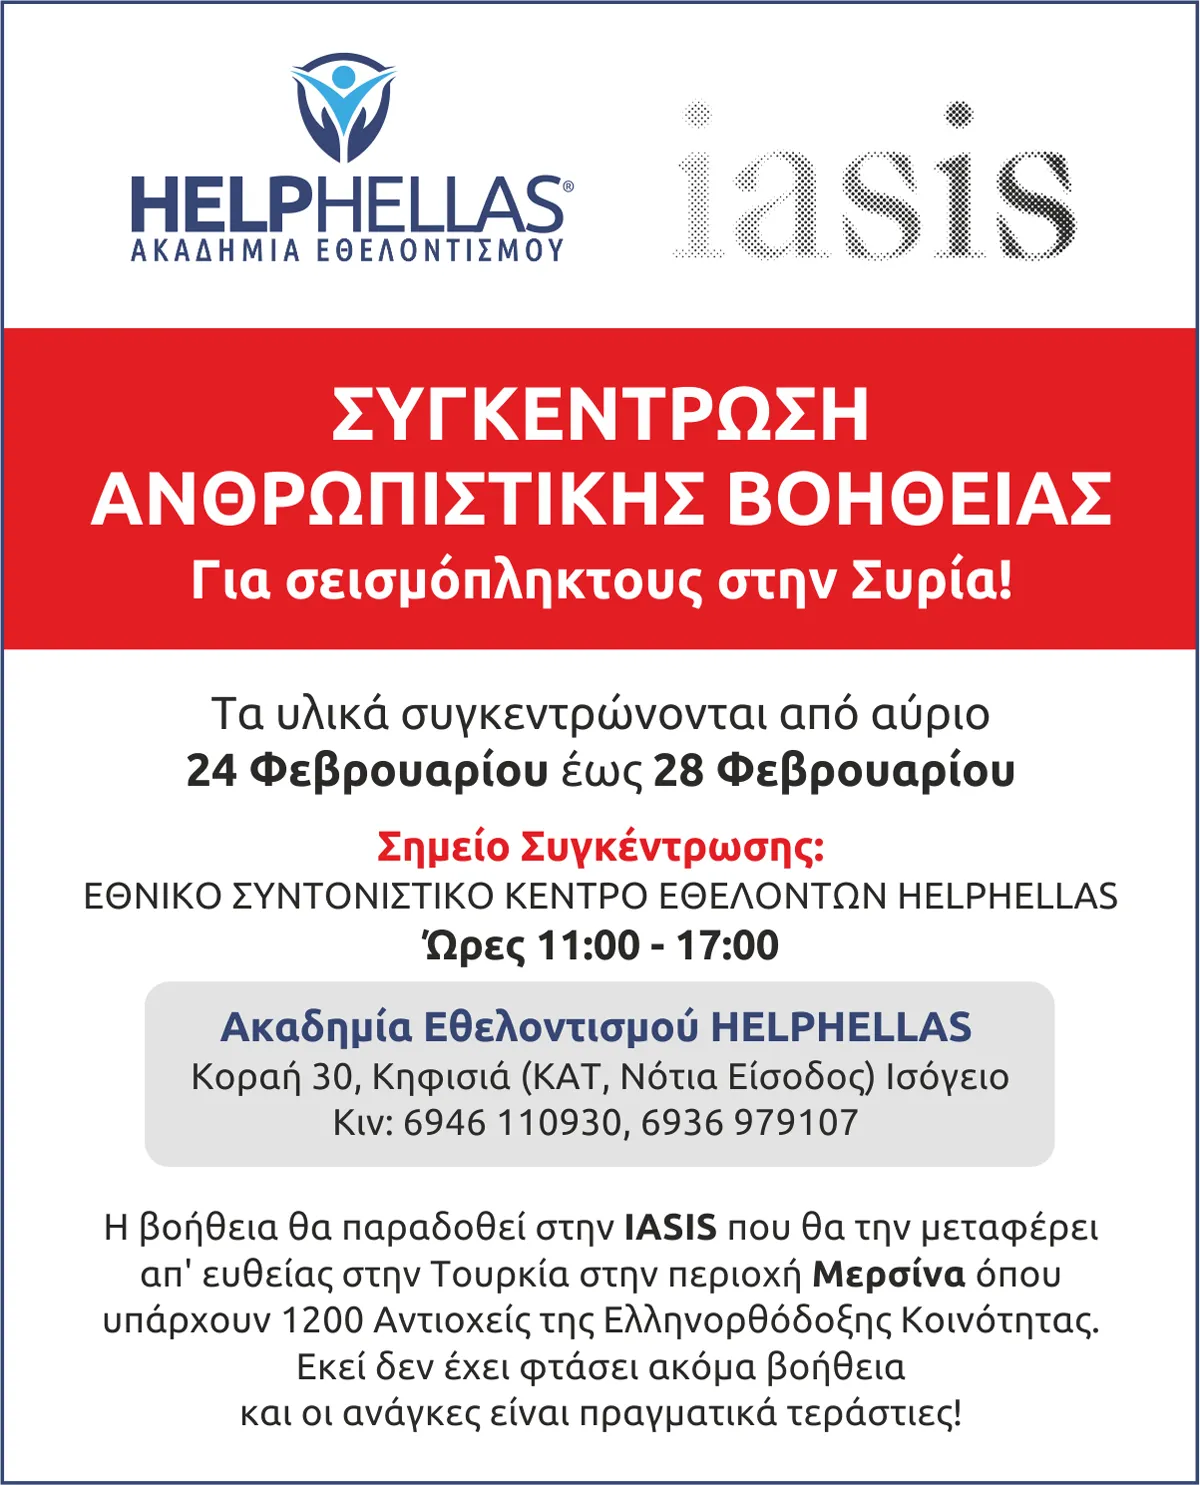 H HELPHELLAS συνεργάζεται με την IASIS στην αποστολή άμεσης ανθρωπιστικής βοήθειας στην ΣΥΡΙΑ.